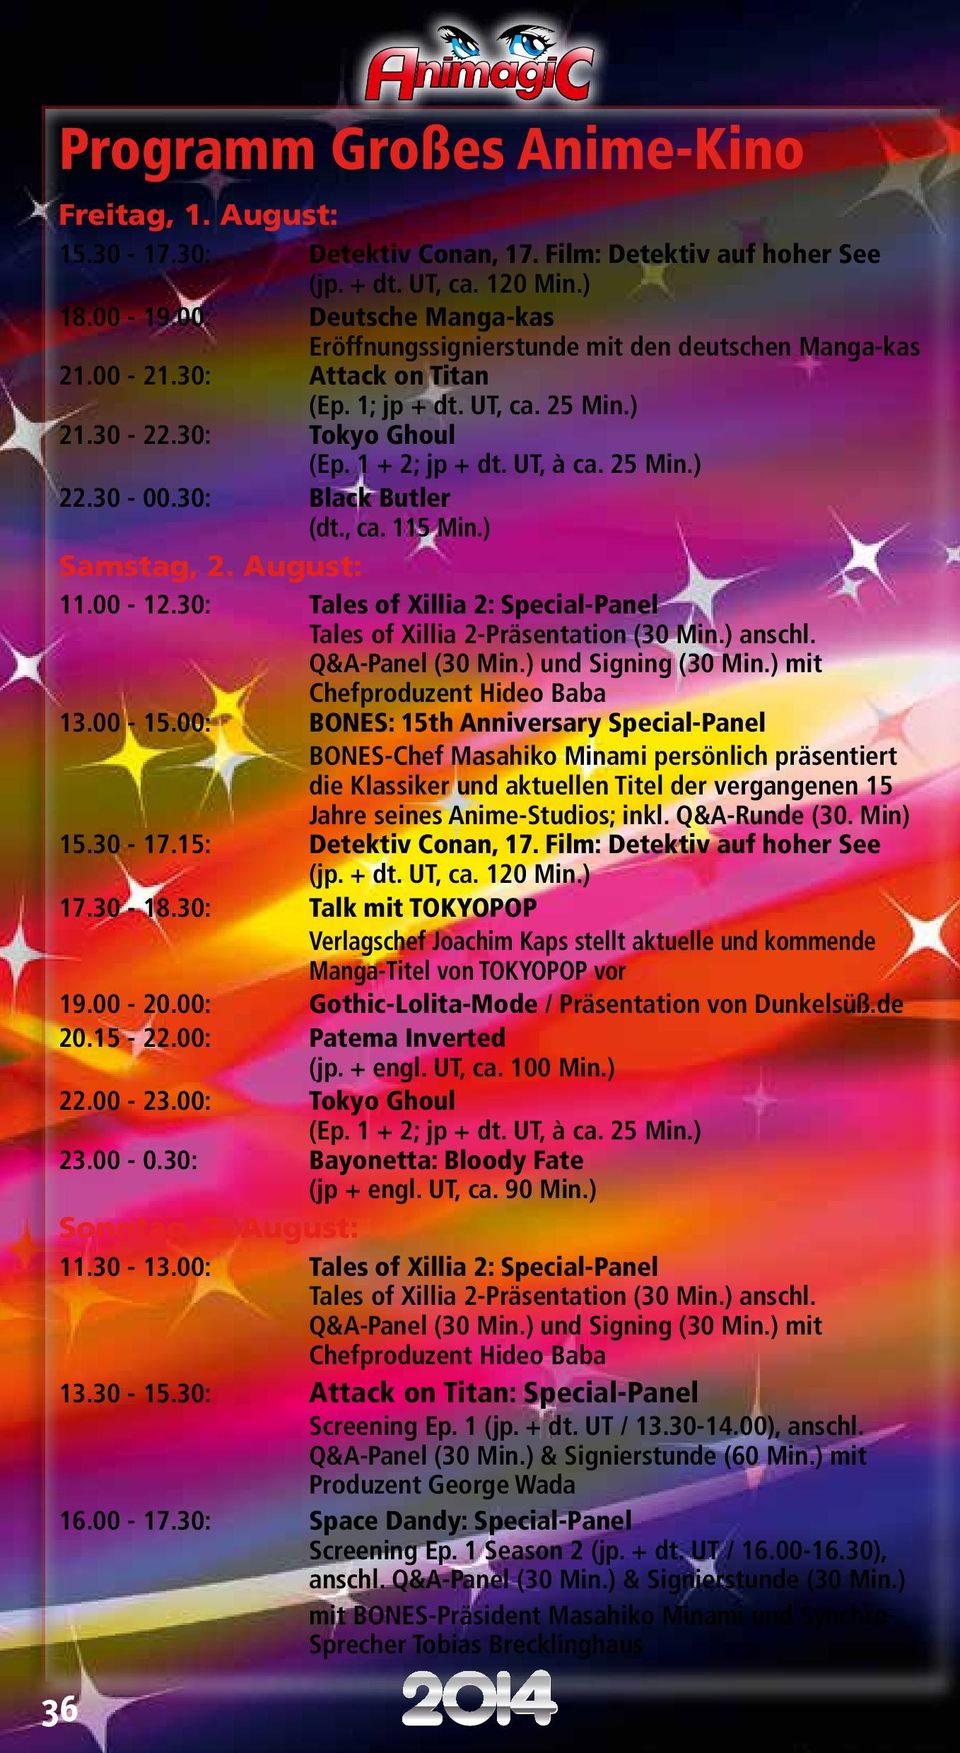 25 Min.) 22.30-00.30: Black Butler (dt., ca. 115 Min.) 11.00-12.30: Tales of Xillia 2: Special-Panel Tales of Xillia 2-Präsentation (30 Min.) anschl. Q&A-Panel (30 Min.) und Signing (30 Min.